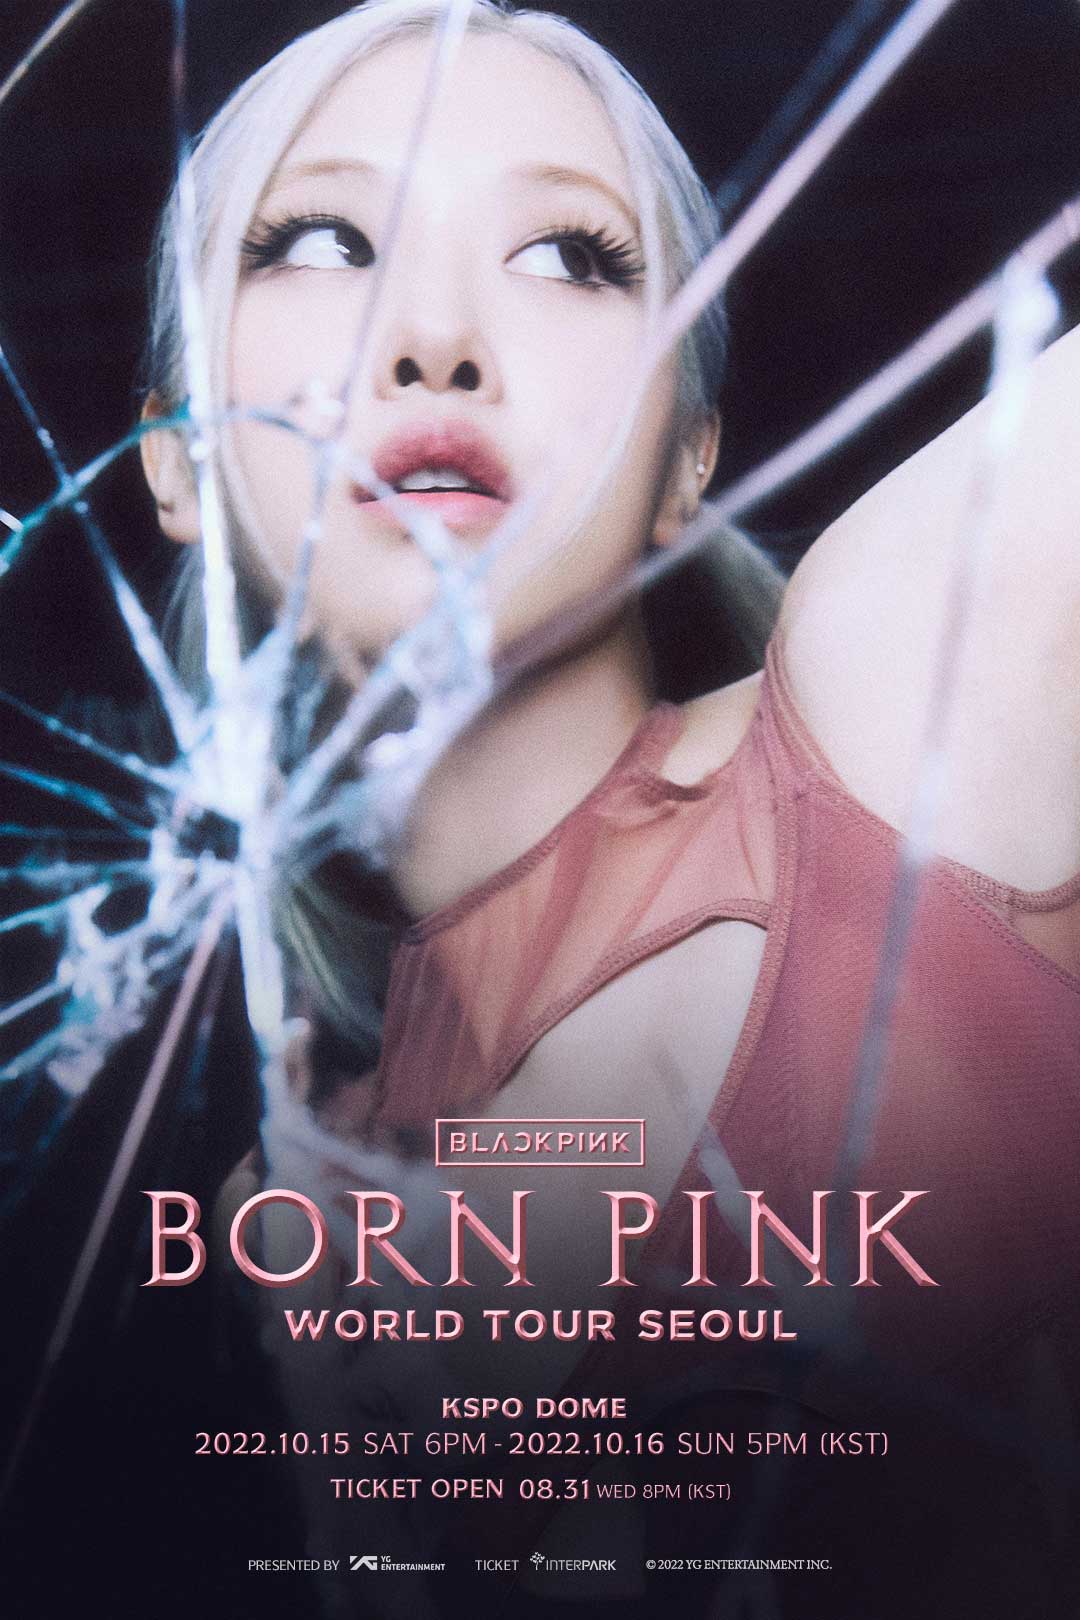 World tour born pink seoul rose v02.jpg